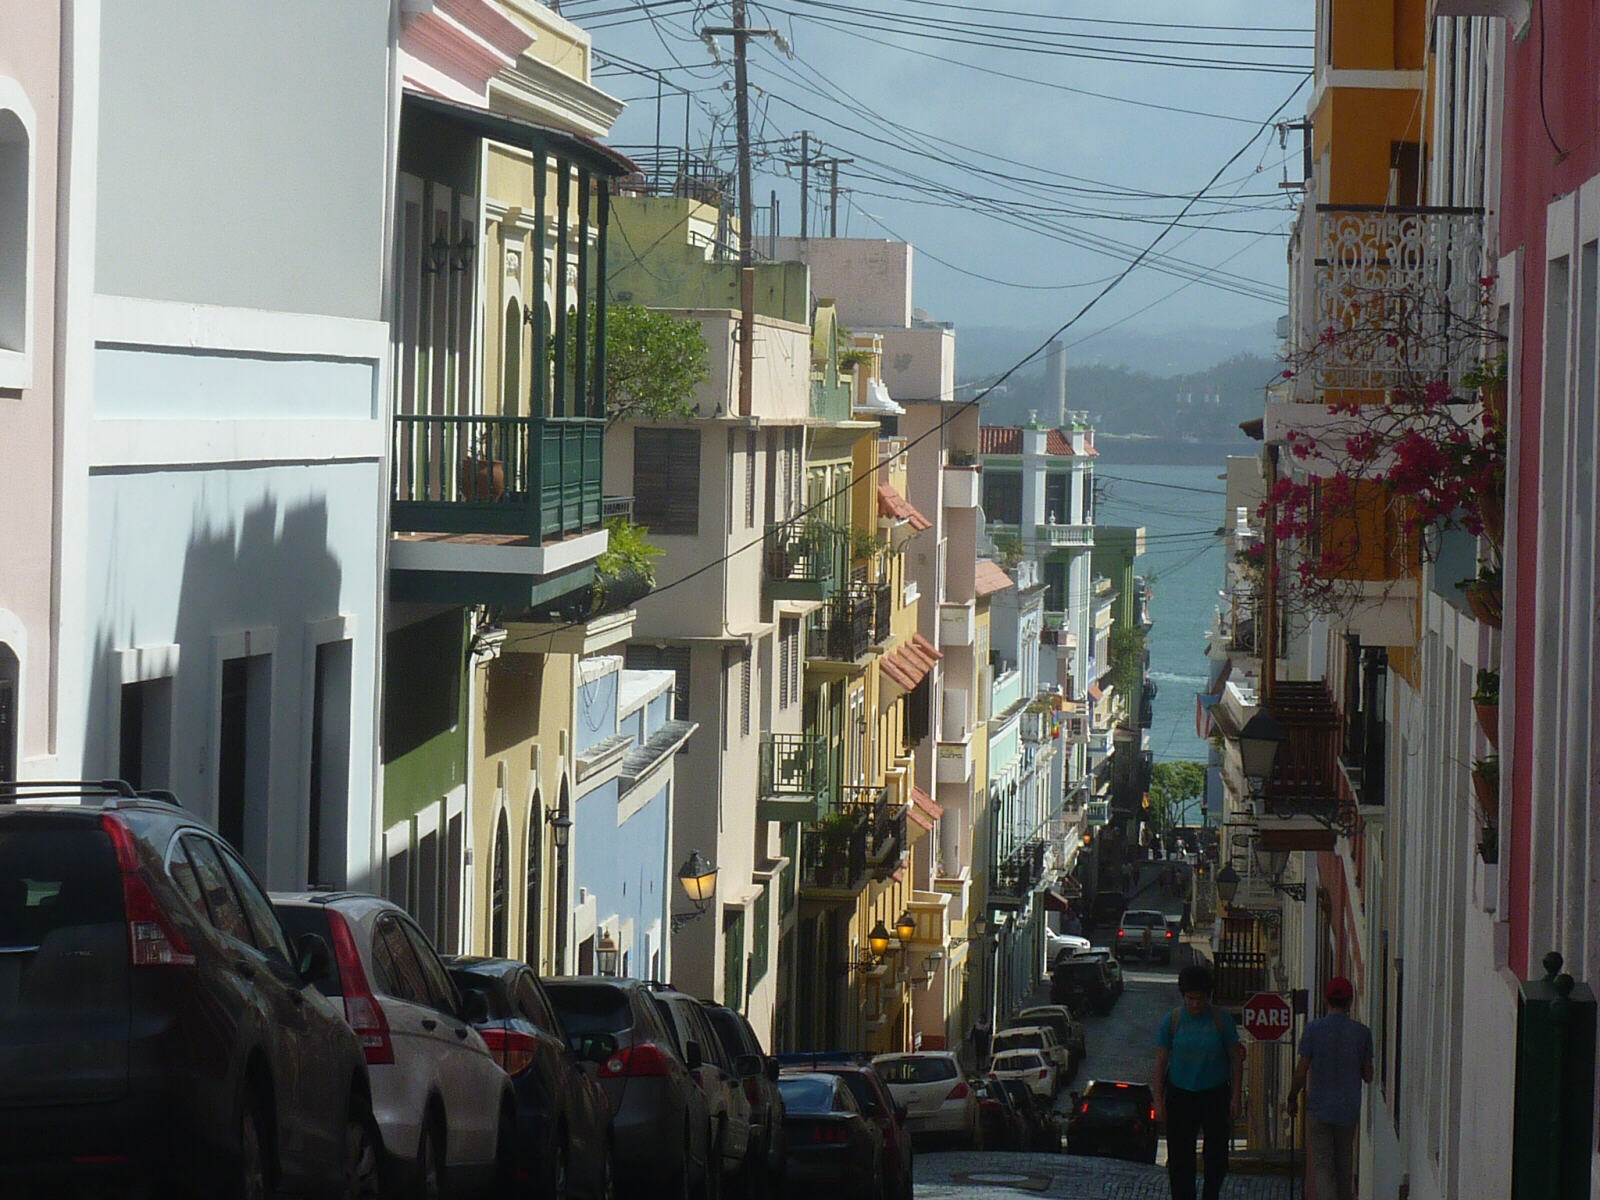 A street in Old San Juan, Puerto Rico